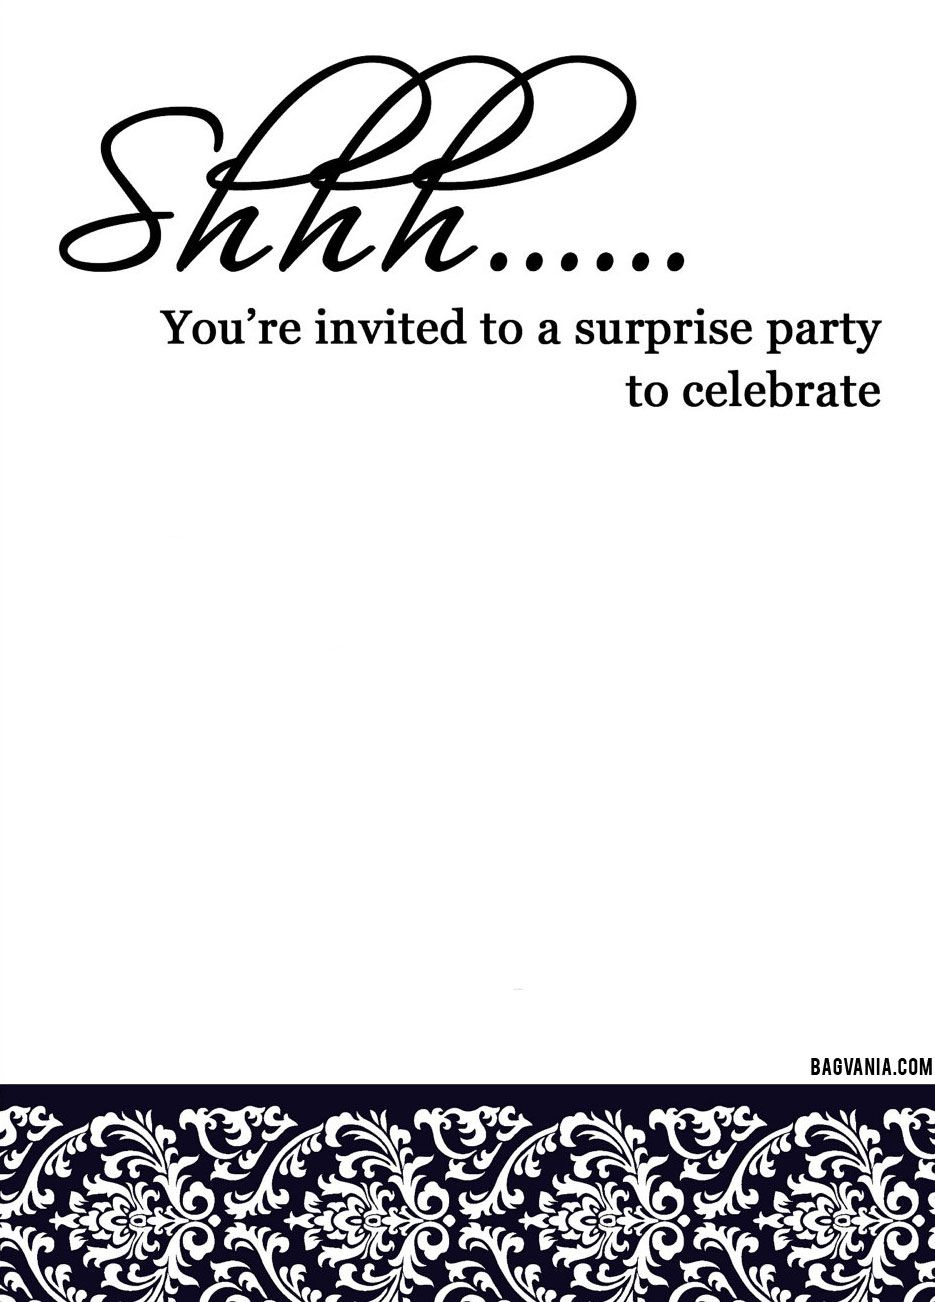 Download Now Free Adult Birthday Invitations | Bagvania Invitation - Free Printable Surprise Party Invitation Templates